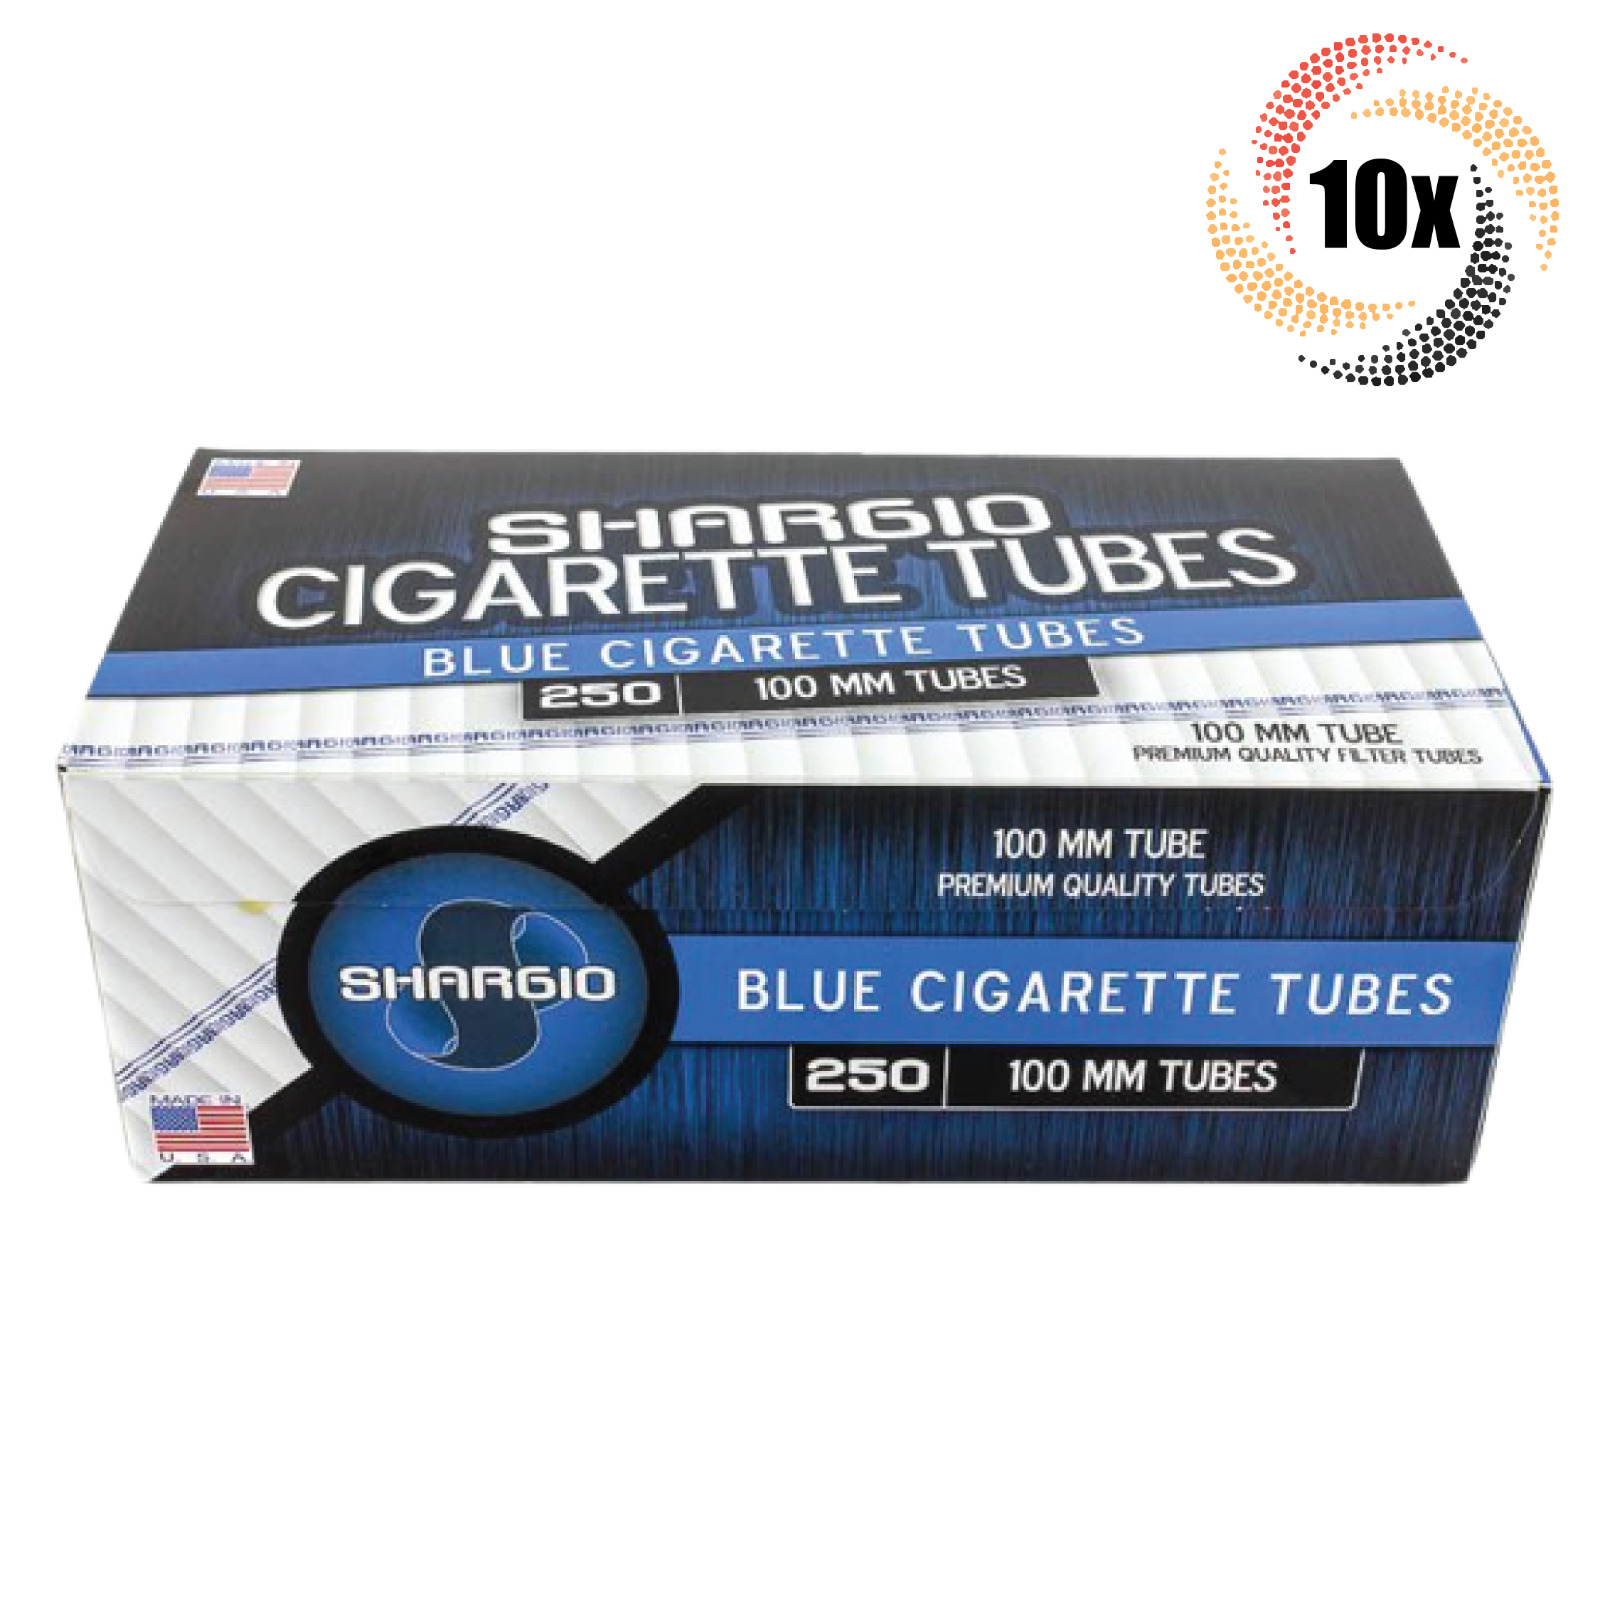 10x Boxes Shargio Blue Light 100MM 100\'s ( 2,500 Tubes ) Cigarette Tobacco RYO